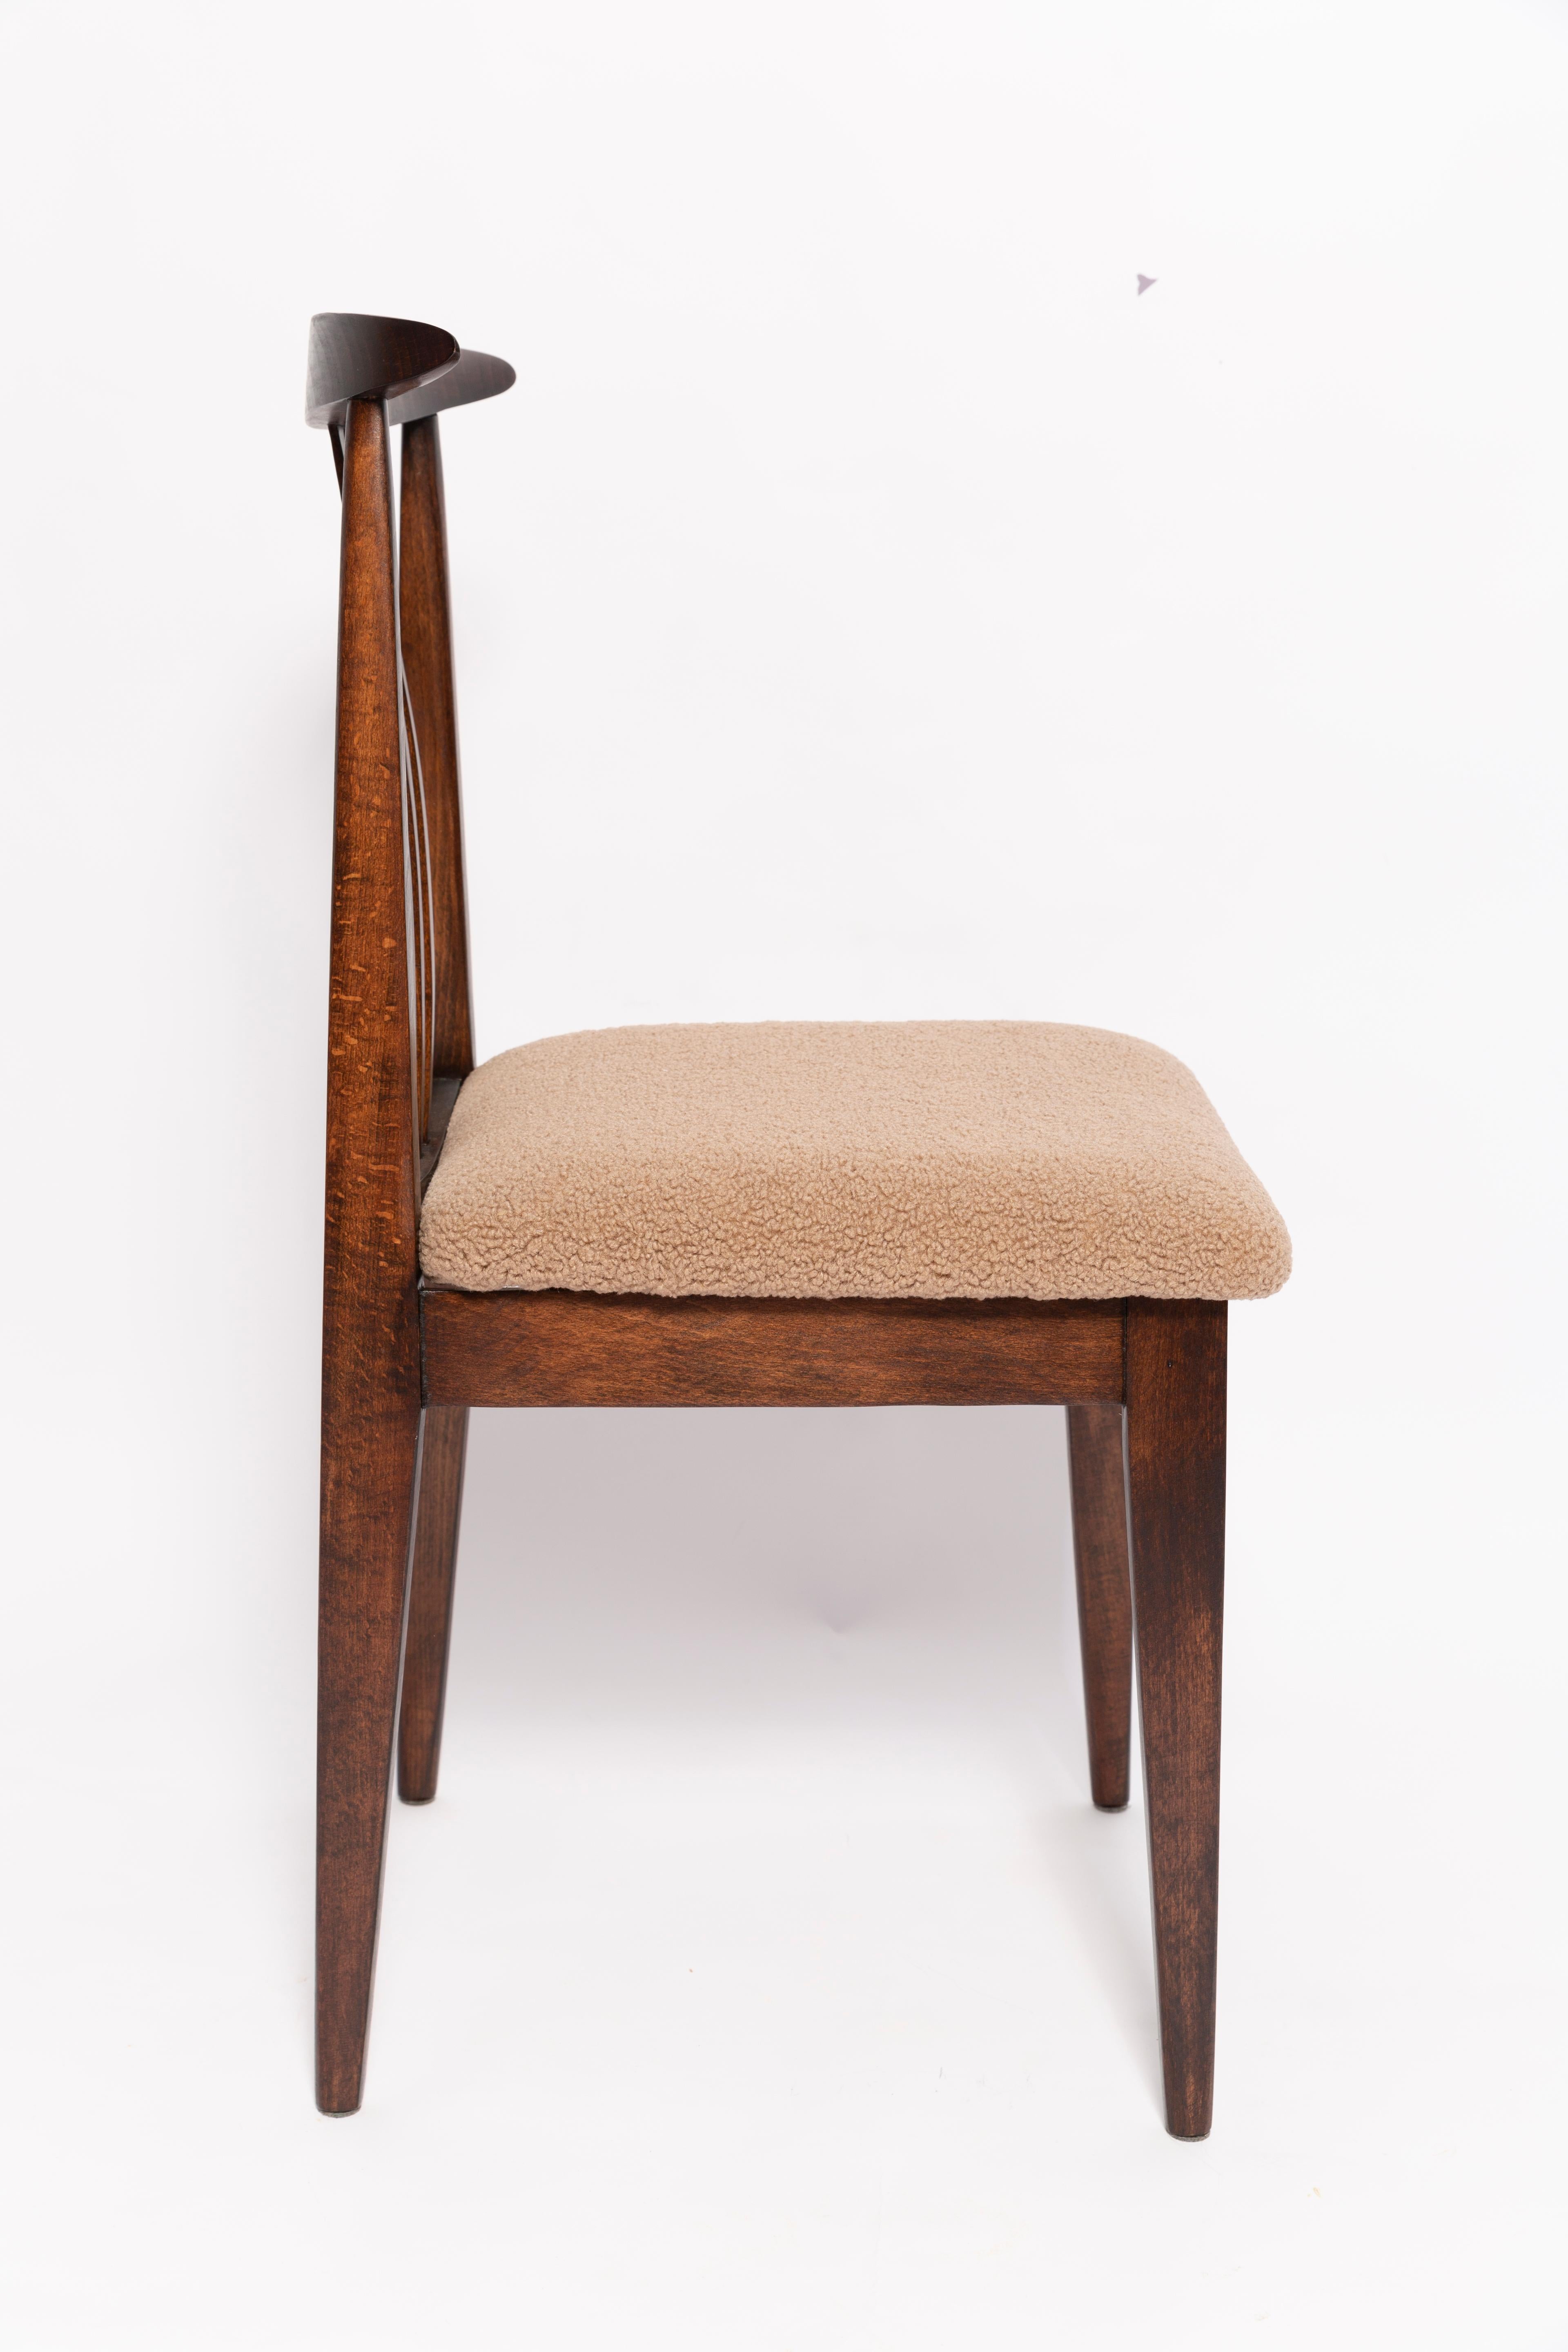 Polish Twelve Mid-Century Latte Boucle Chairs, Walnut Wood, M. Zielinski, Europe 1960s For Sale